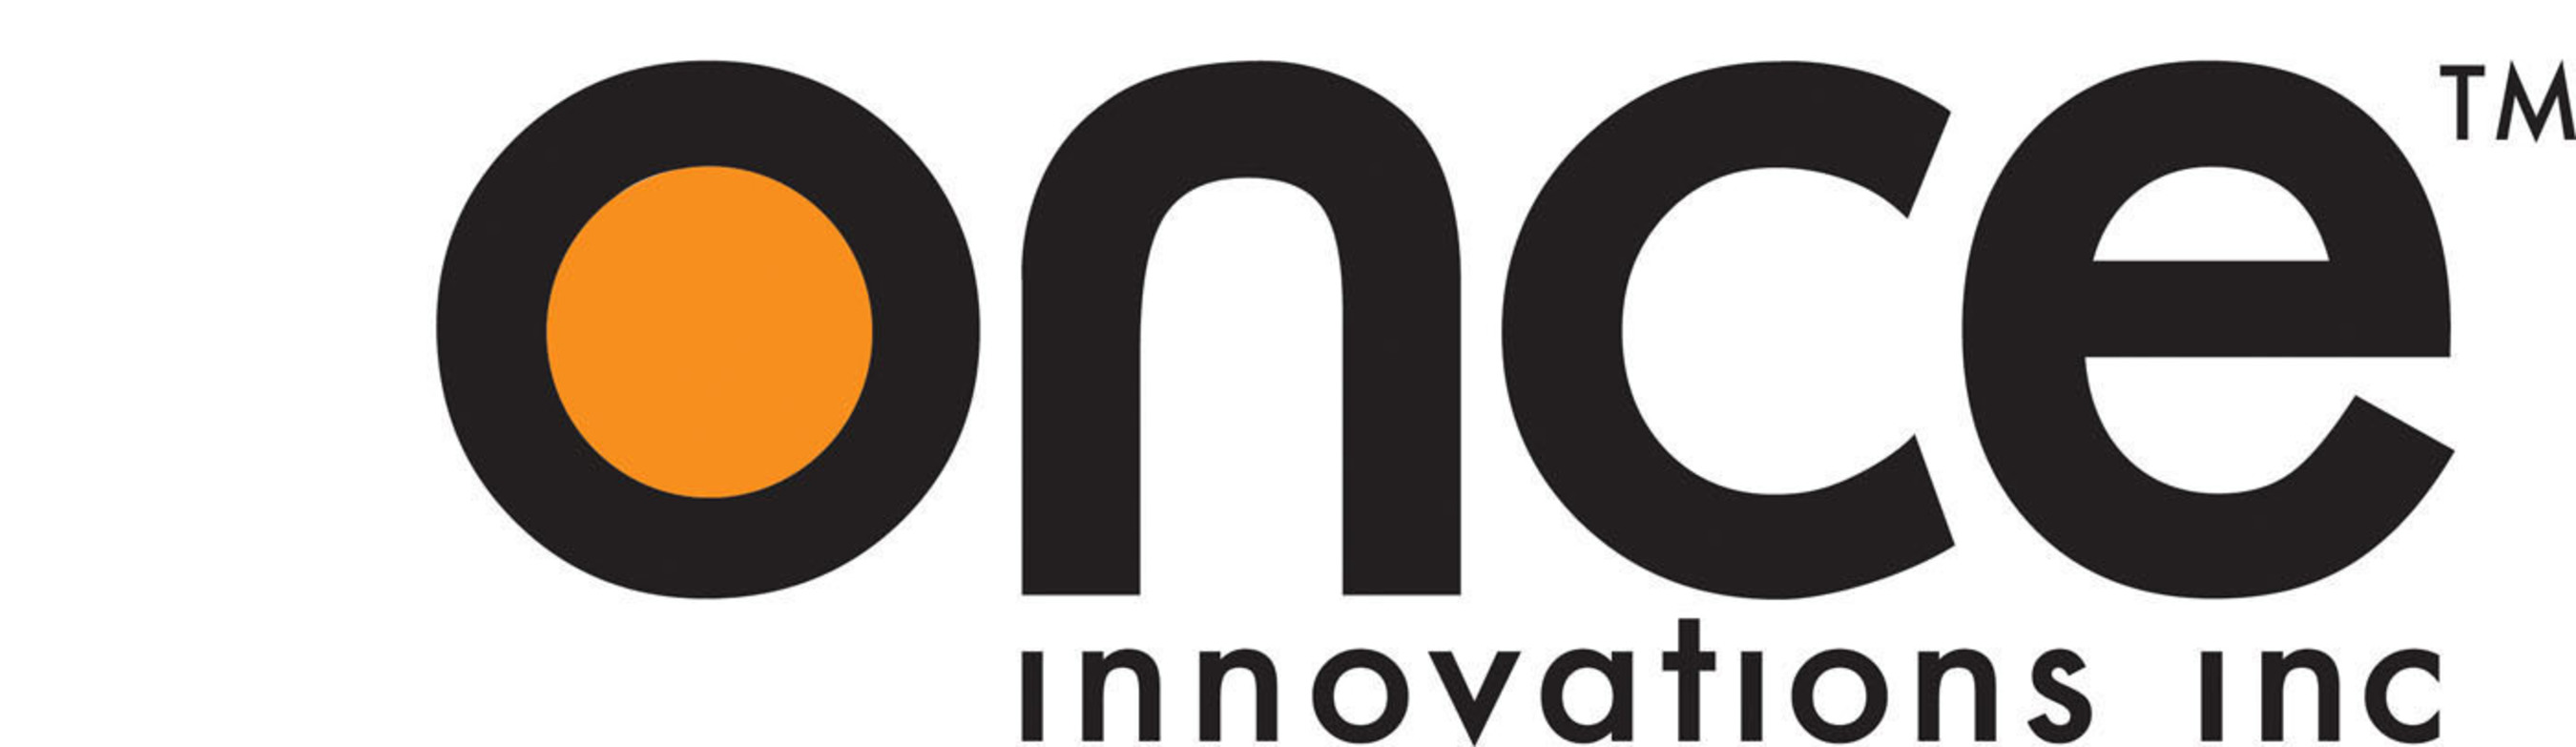 LED Technology Development Company; ONCE Corporate Logo; onceinnovations.com. (PRNewsFoto/Once Innovations) (PRNewsFoto/)